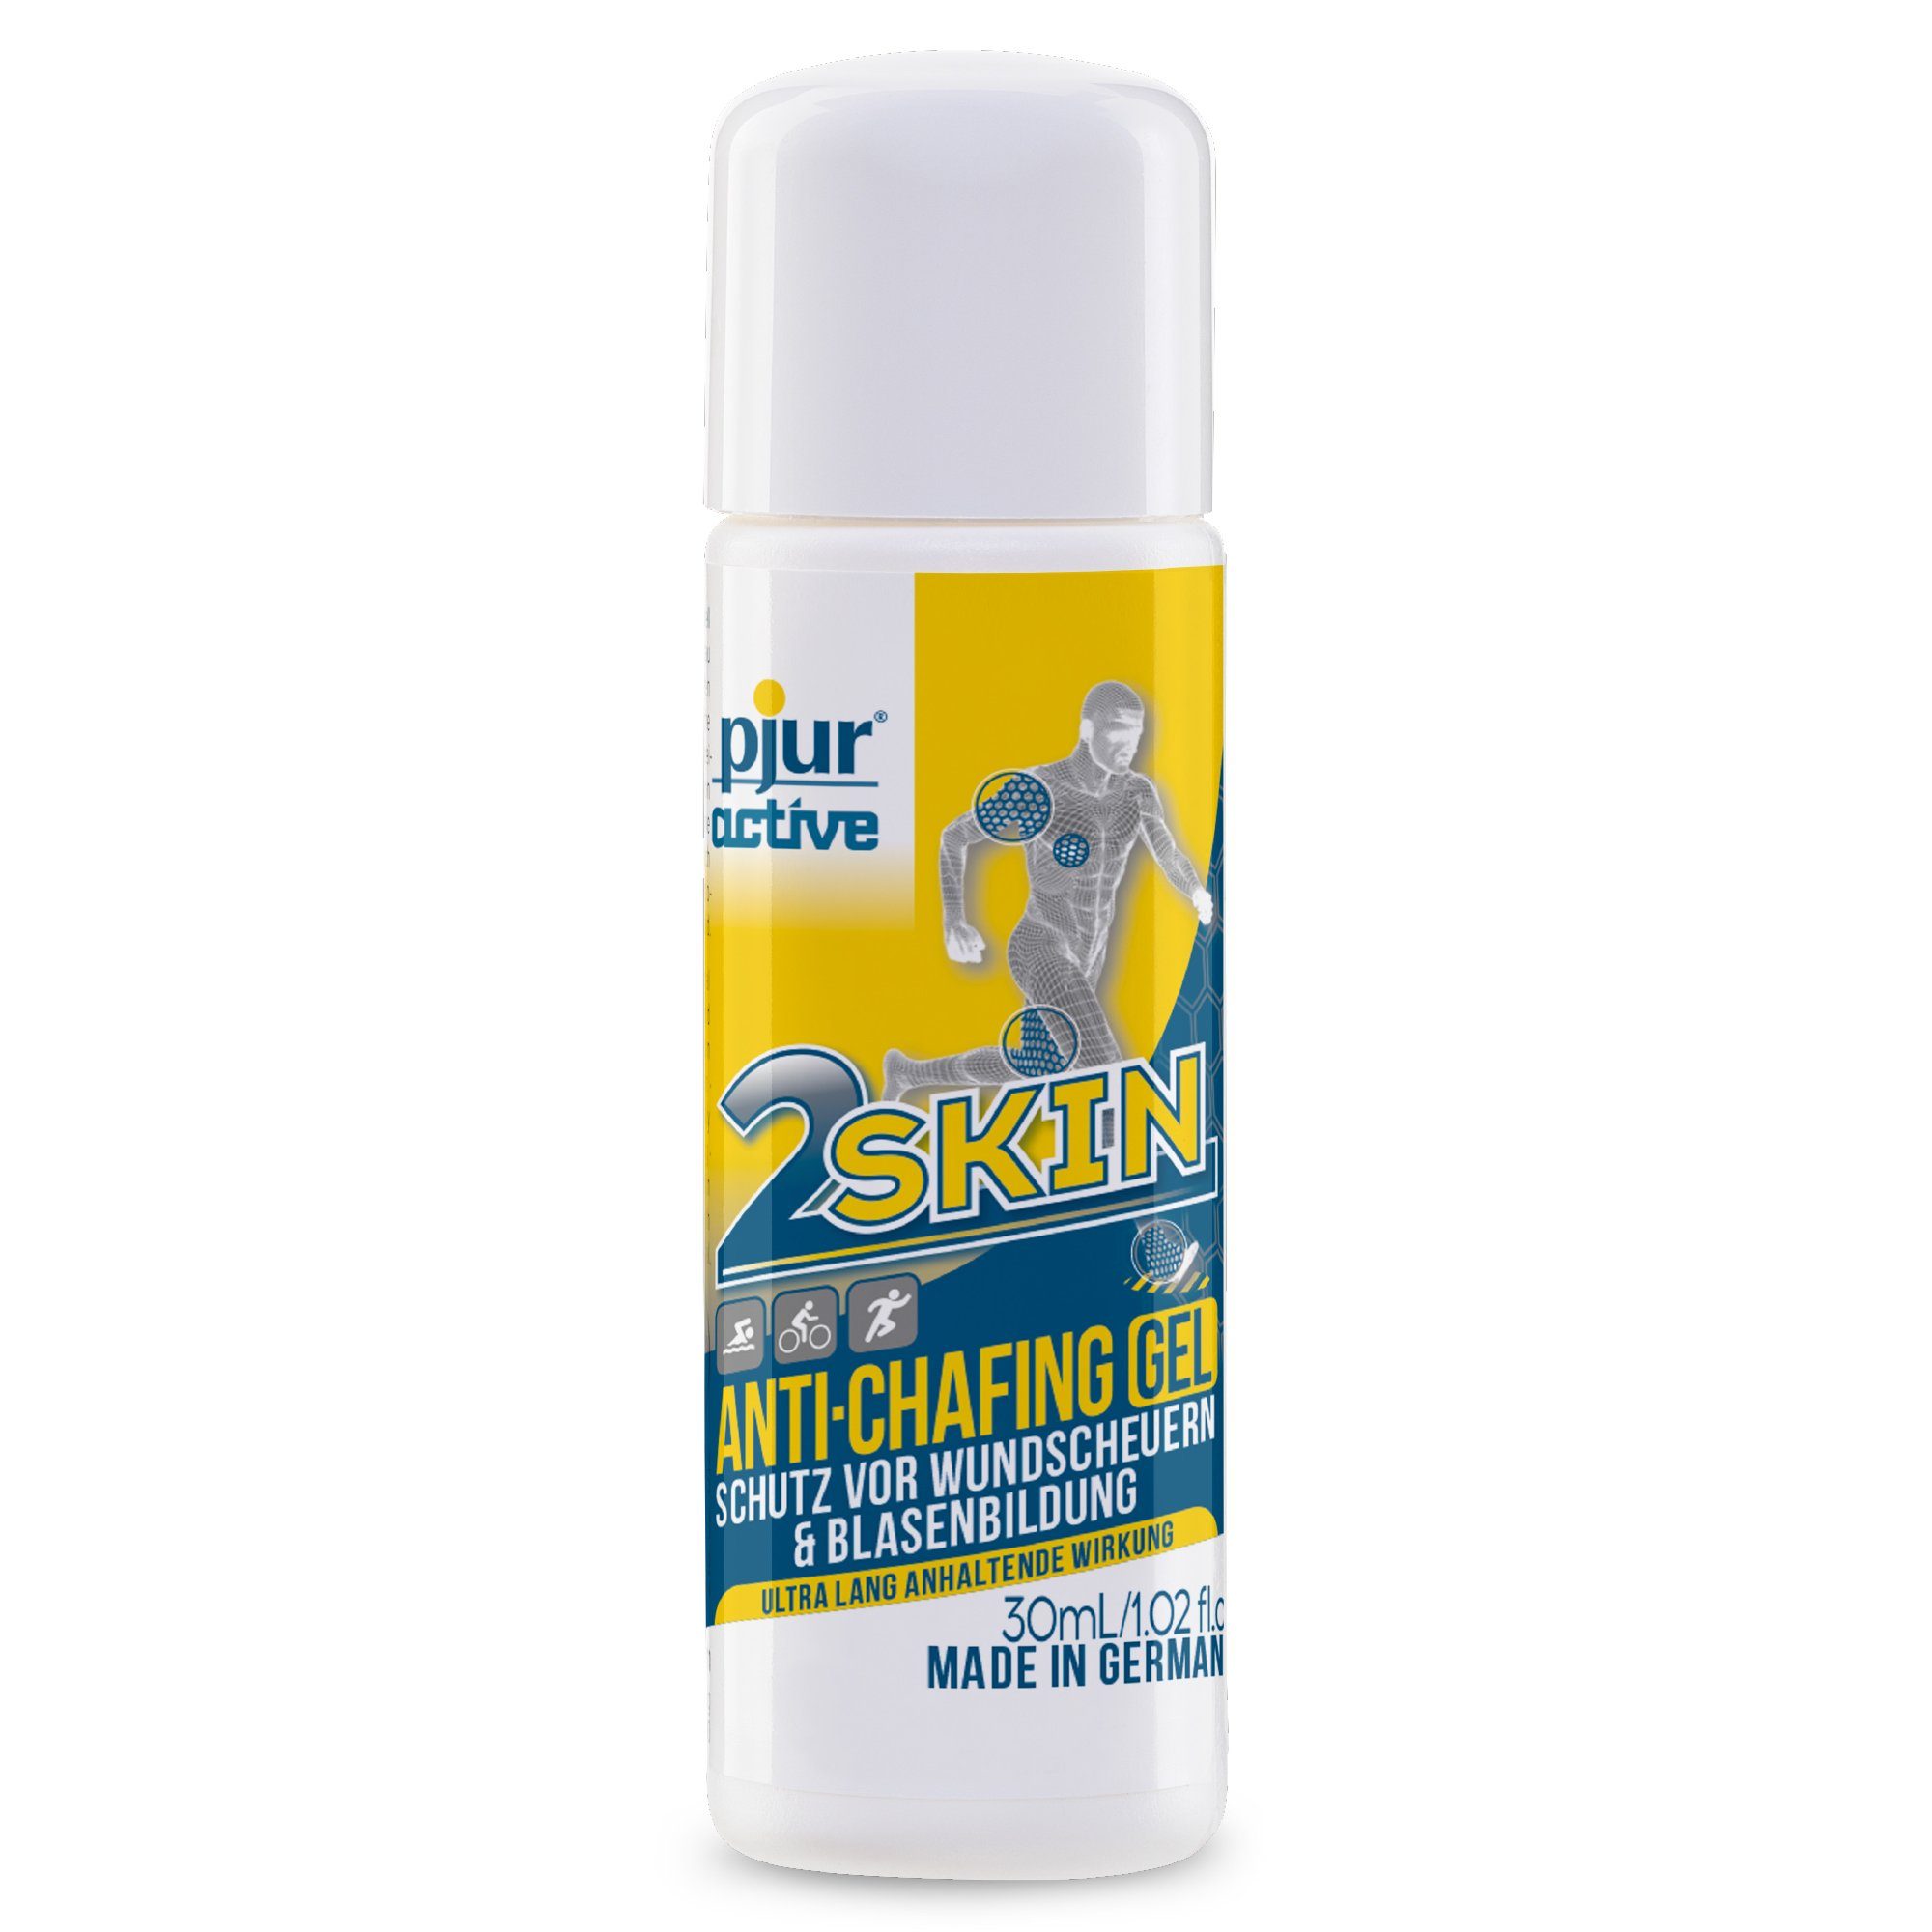 pjur Hautpflegegel pjuractive 2SKIN 30ml Anti Chafing Gel, gegen Reibung & Wundscheuern perfekt für Sportler - Made in Germany